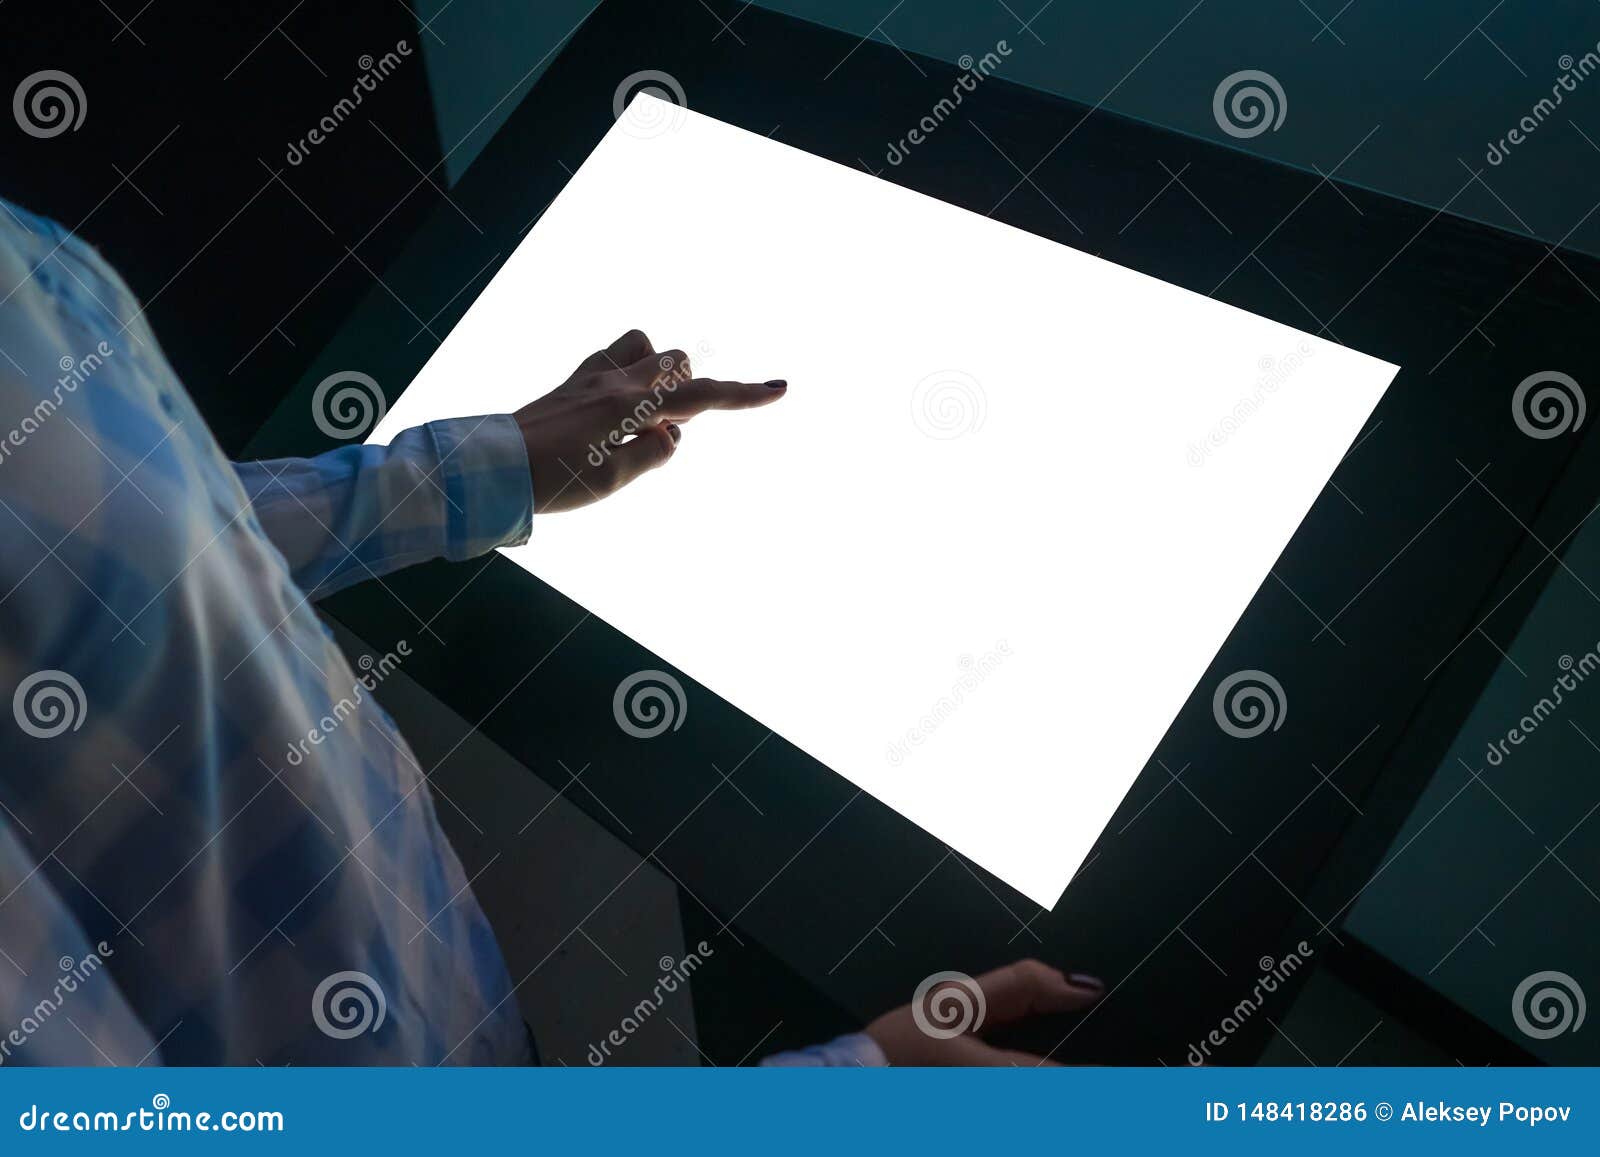 woman touching interactive white blank touchscreen display kiosk at exhibition